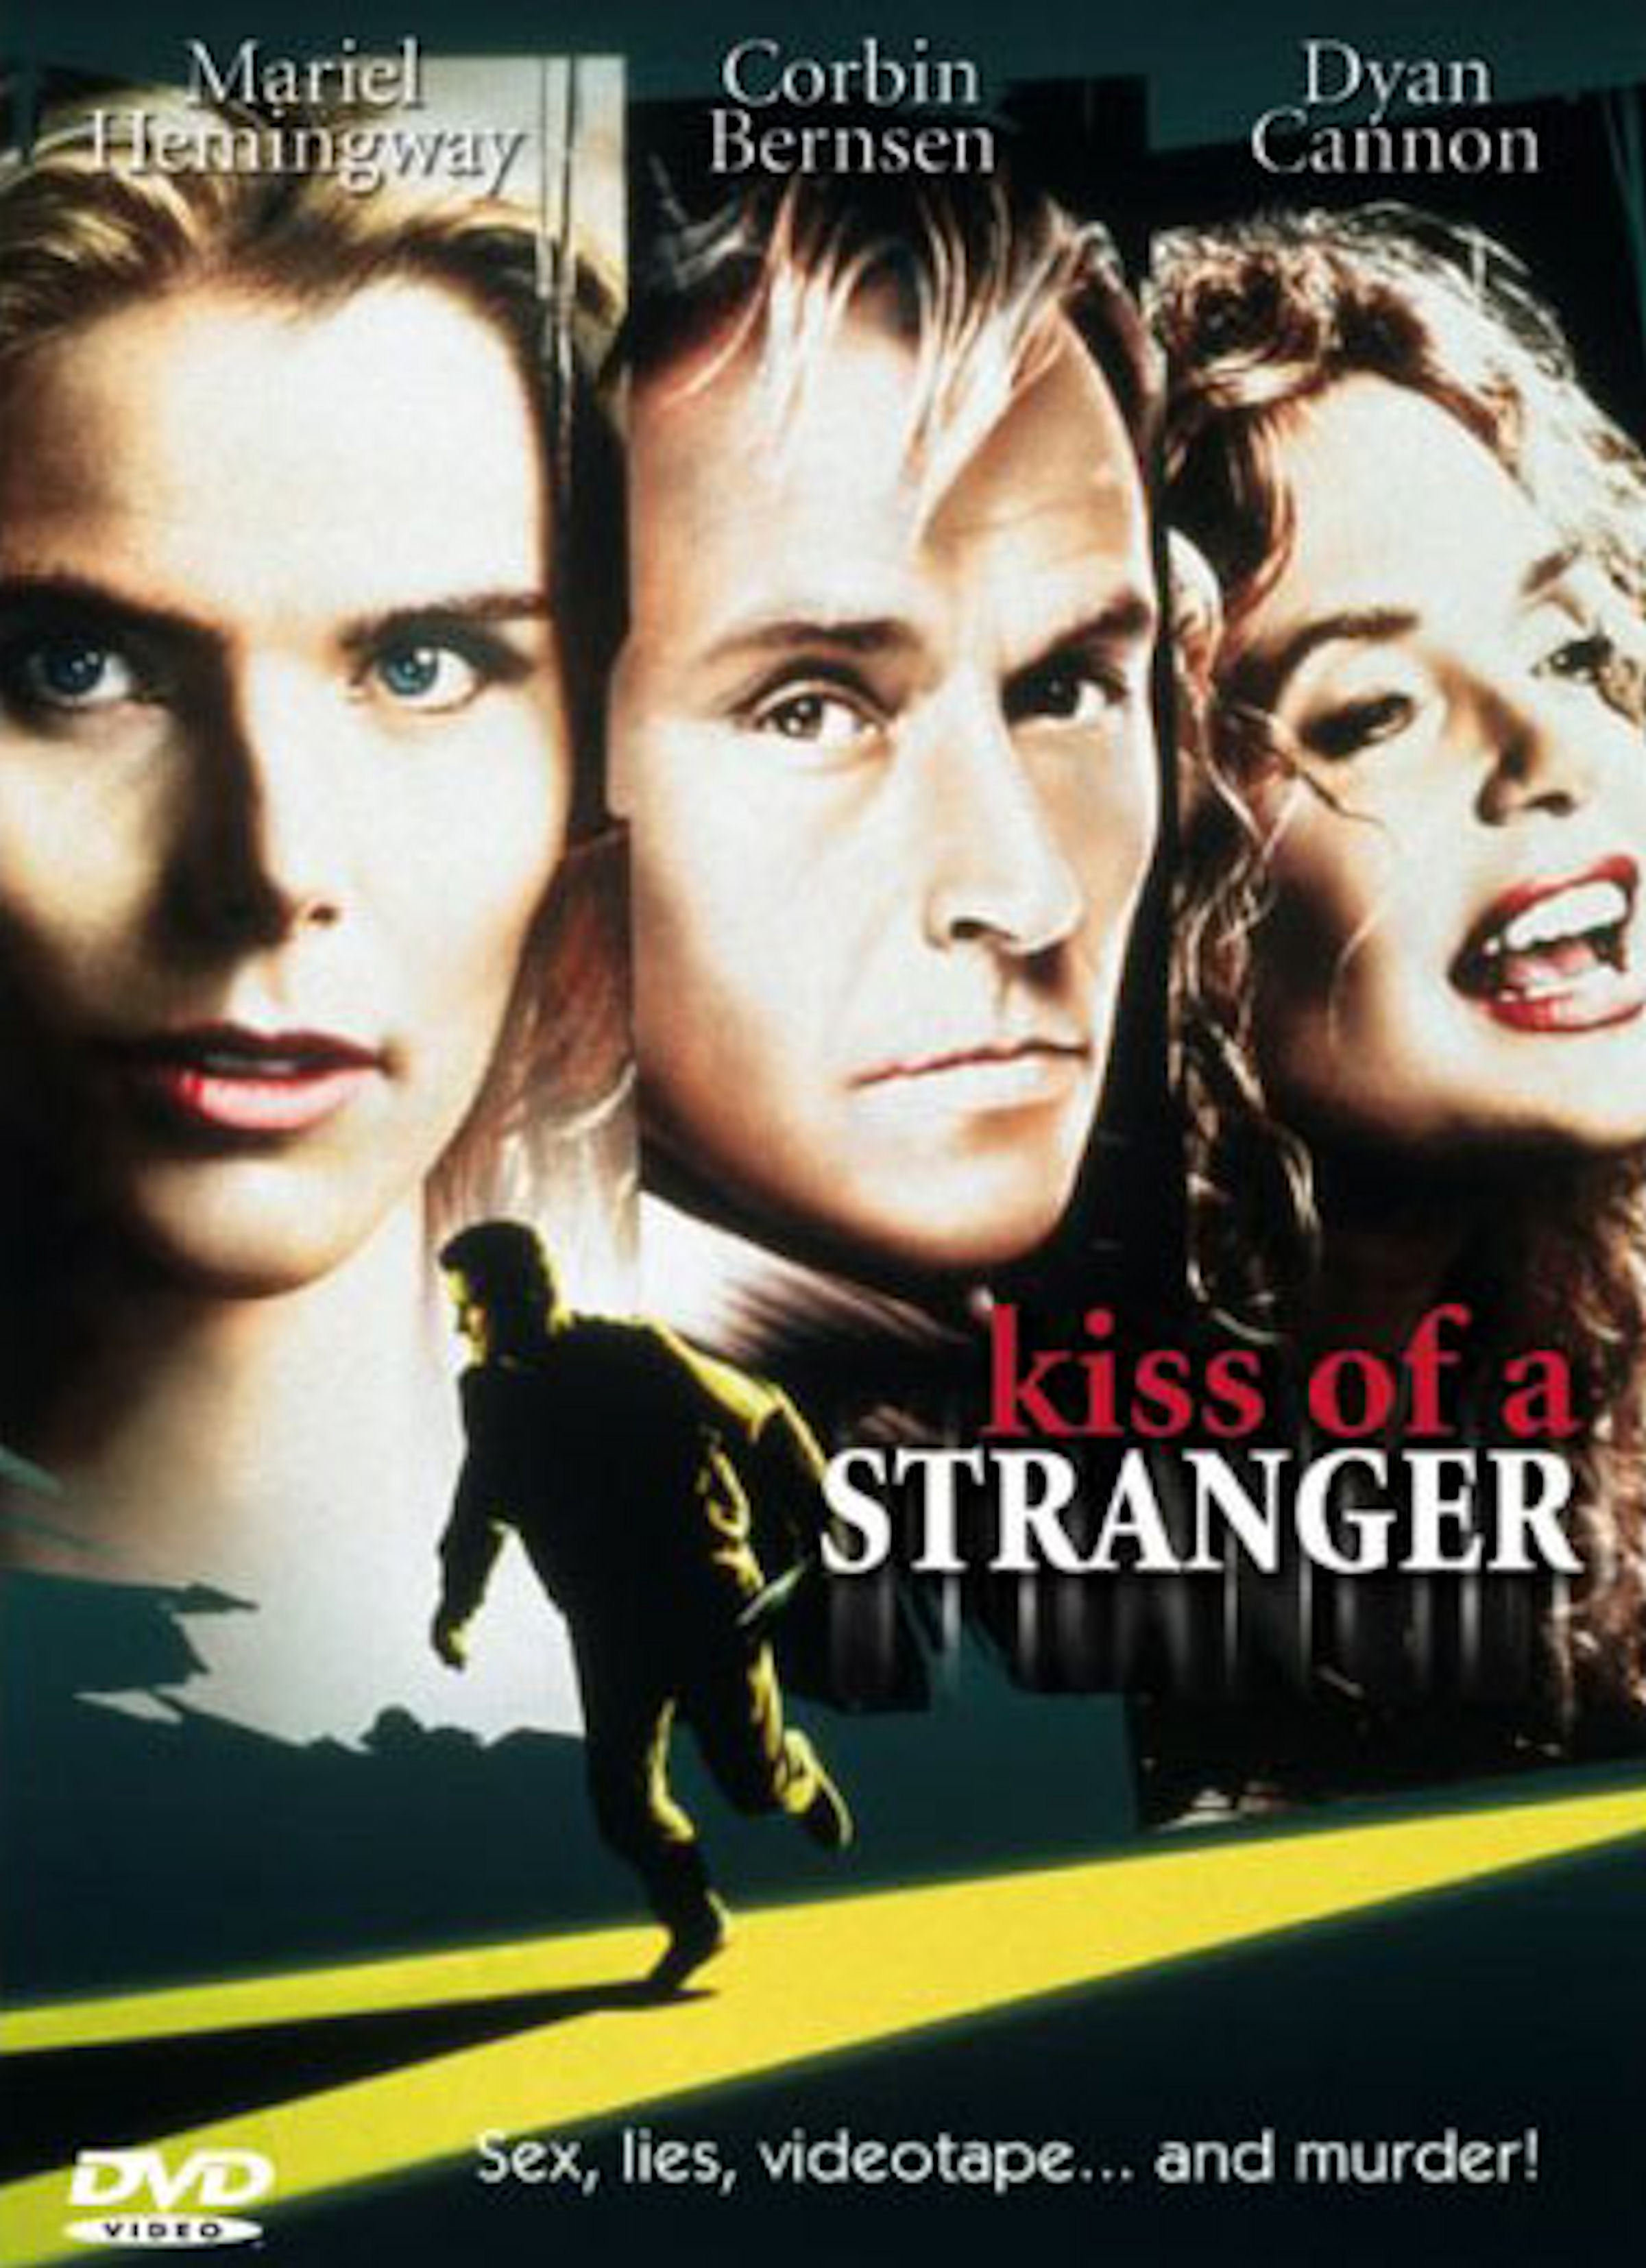 Mariel Hemingway, Corbin Bernsen and Dyan Cannon in Kiss of a Stranger (1999)